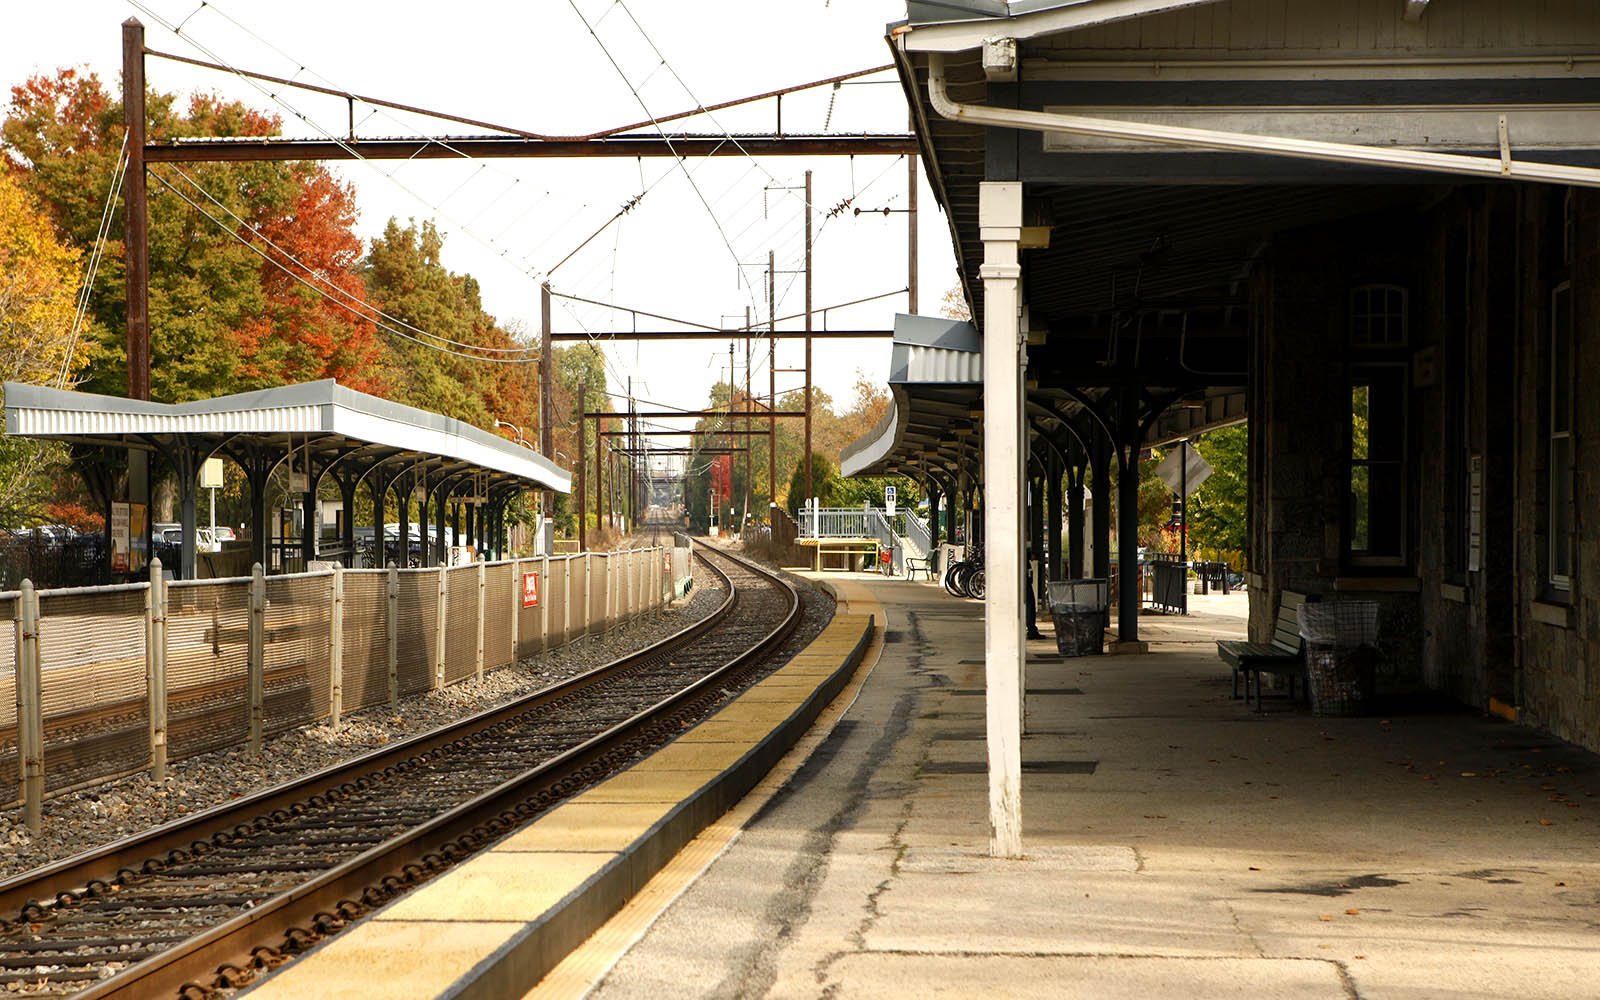 Swarthmore train station scene in Fall